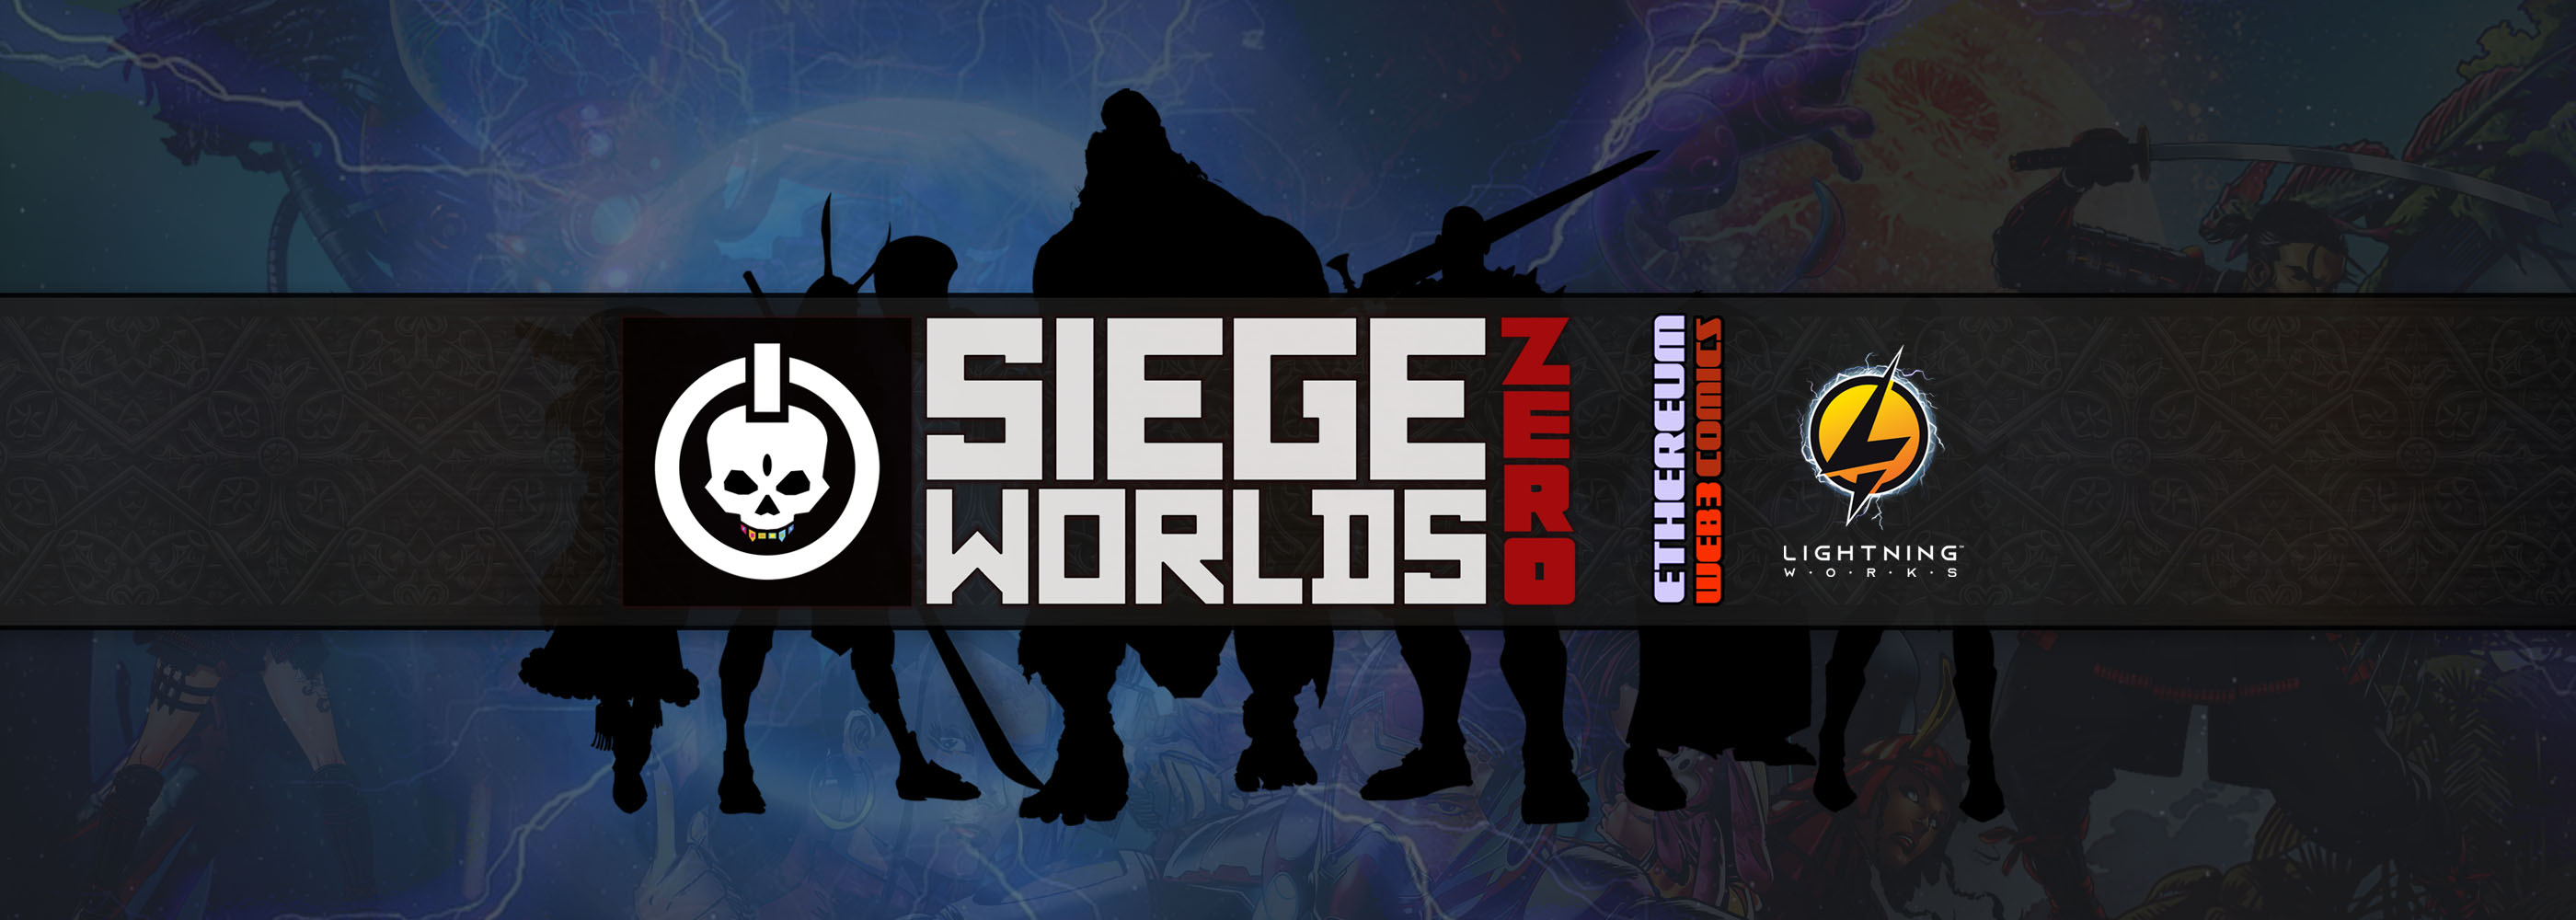 Siege Worlds Zero Comic Book